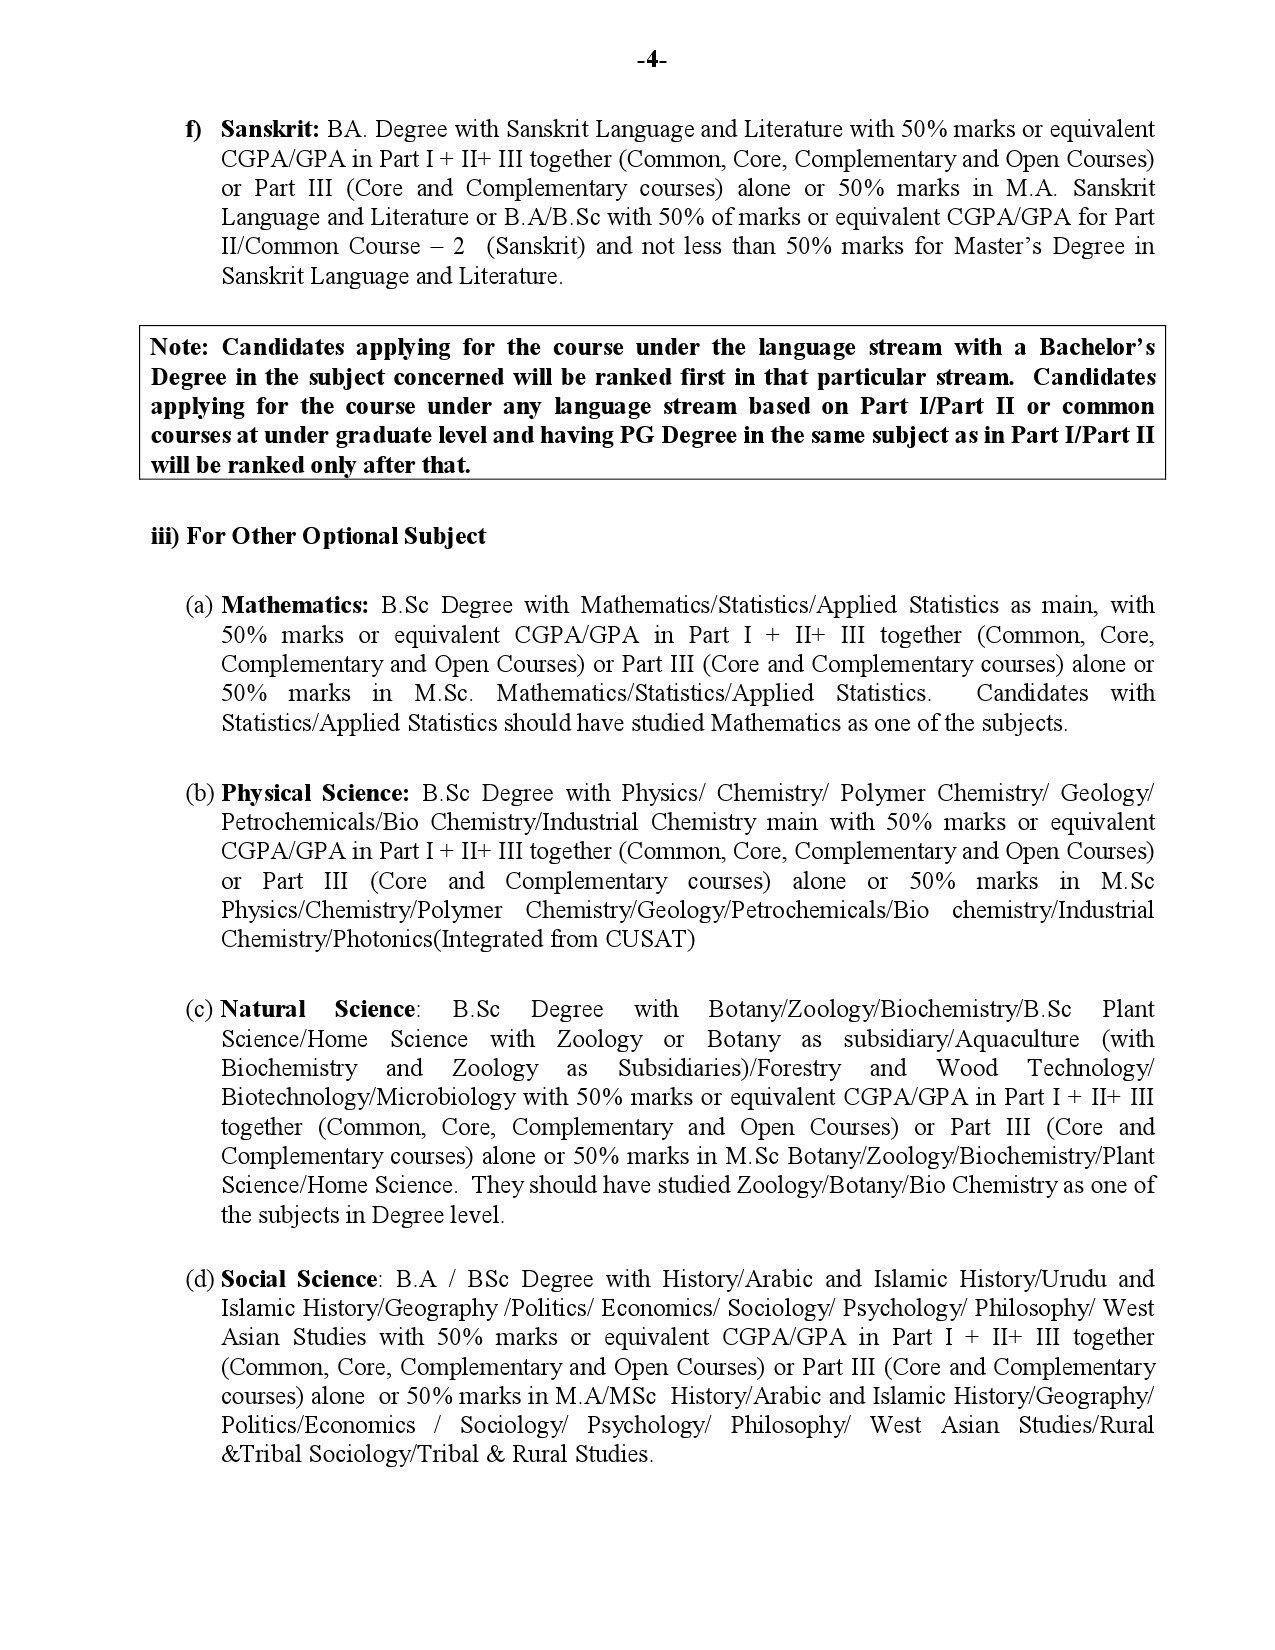 Kannur University B Ed Admission Prospectus 2019 - Notification Image 18